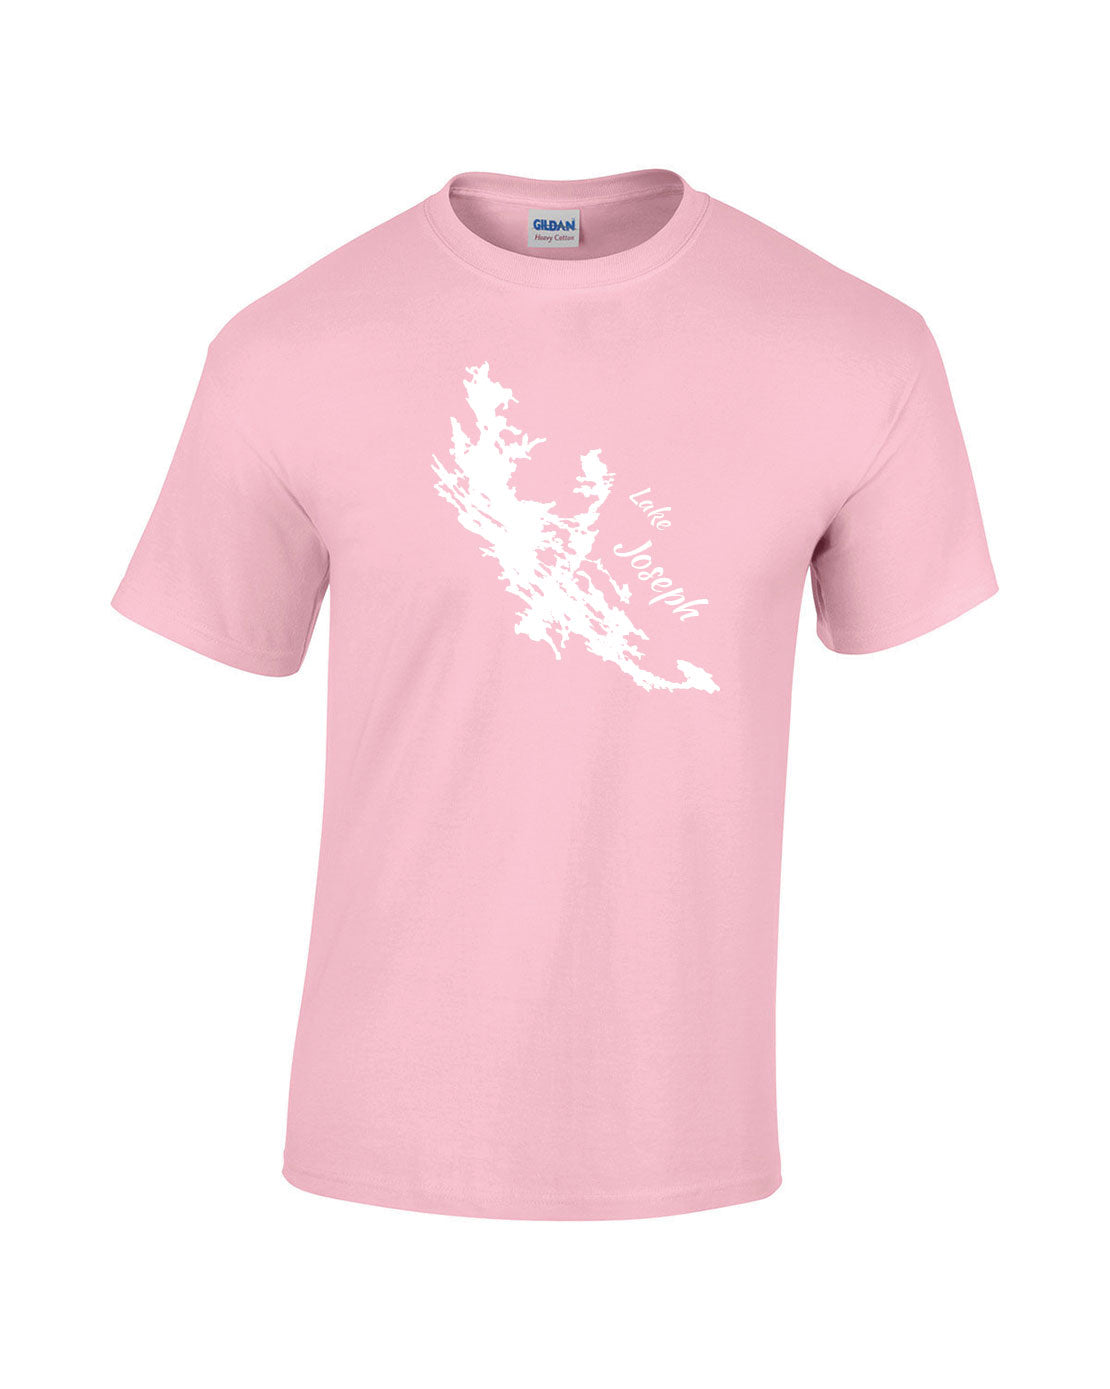 Lake Joseph T-Shirt